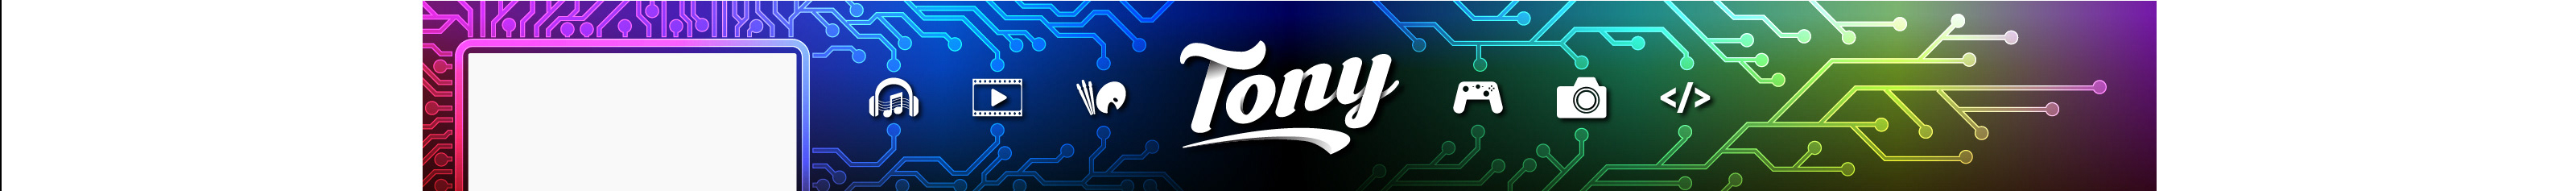 Tony Major's profile banner